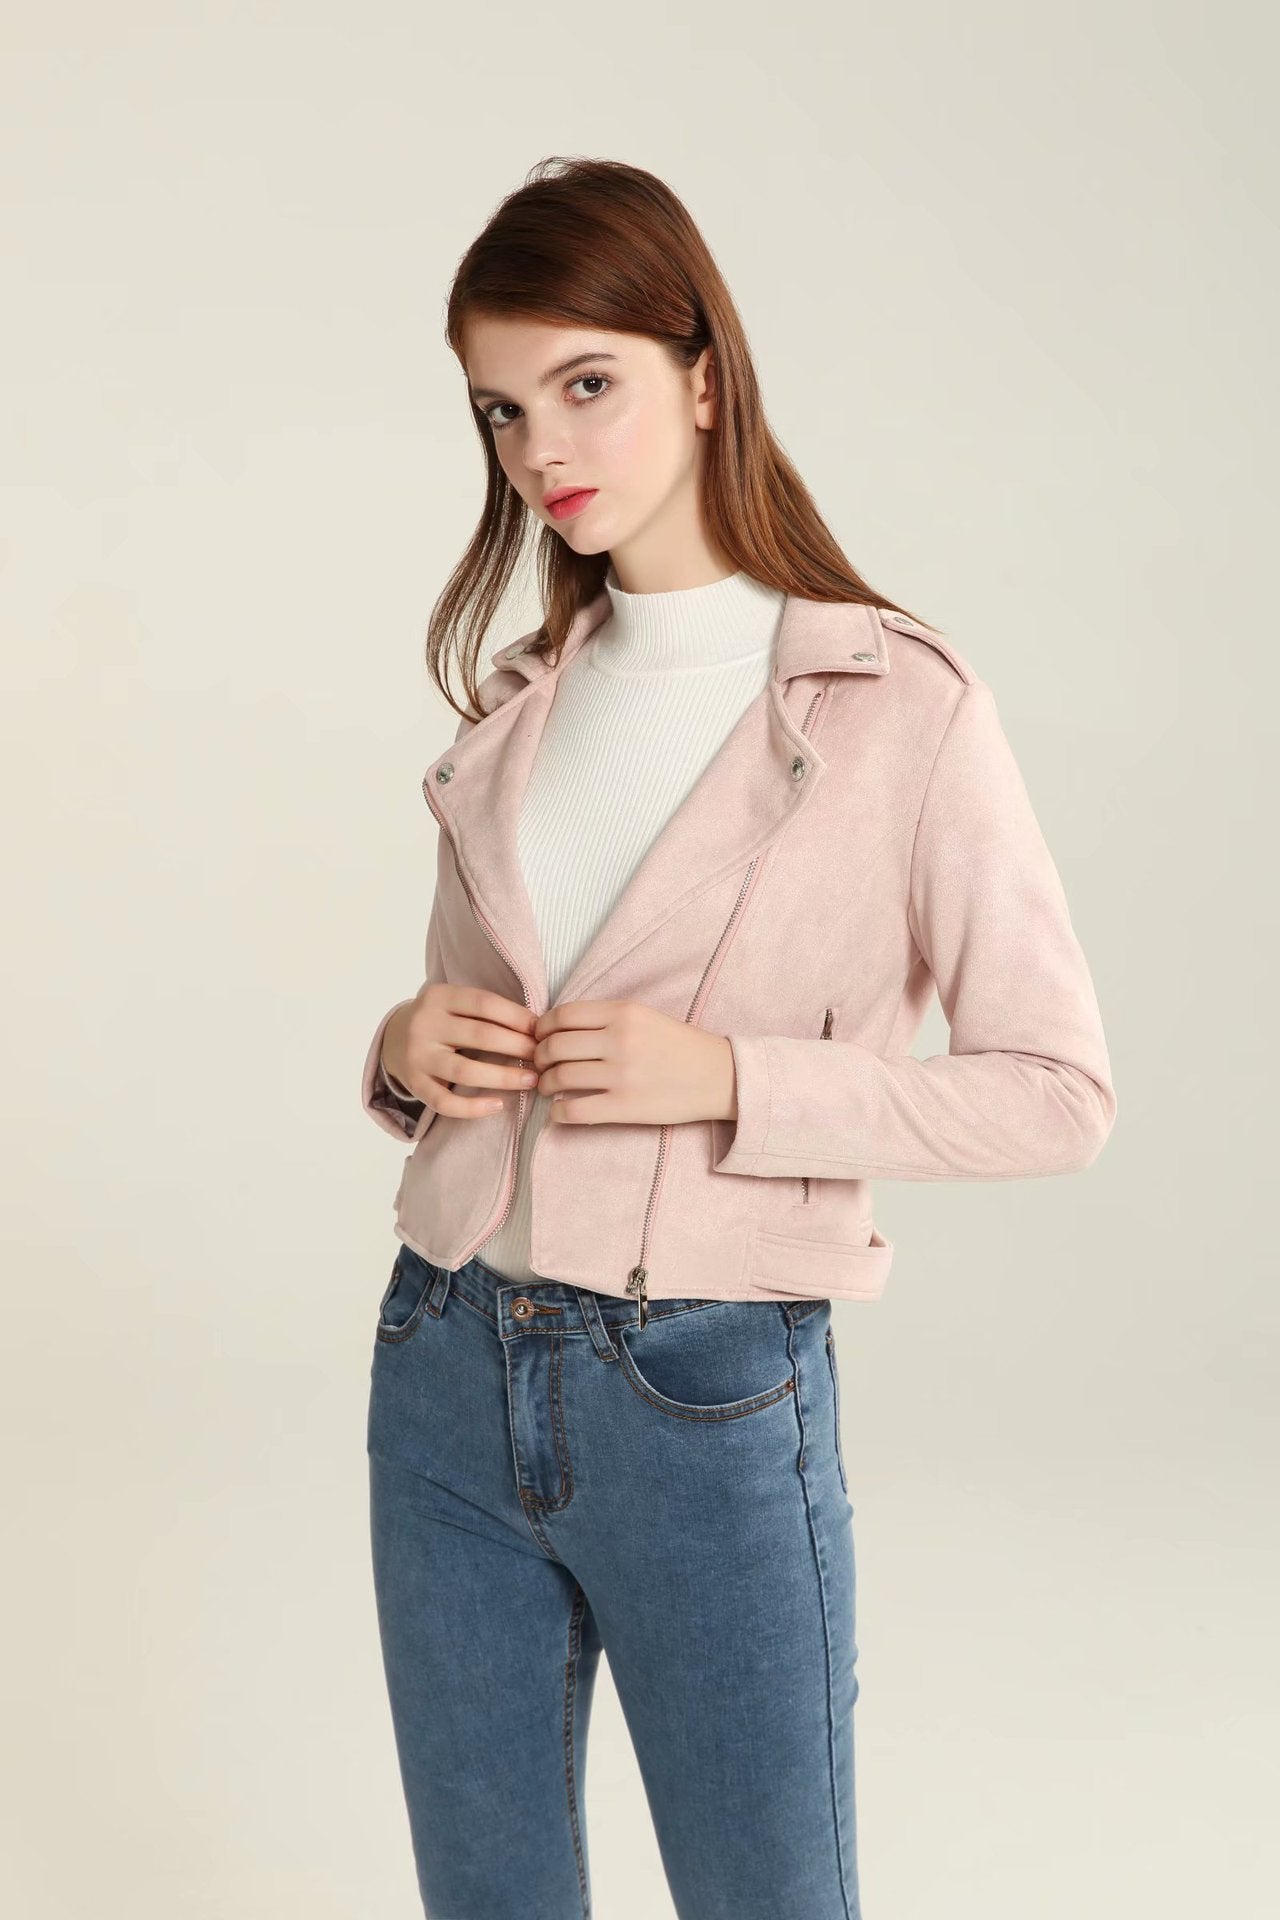 Solid Color Lapel Collar Oblique Zipper Women Slim Cropped Jacket Coat